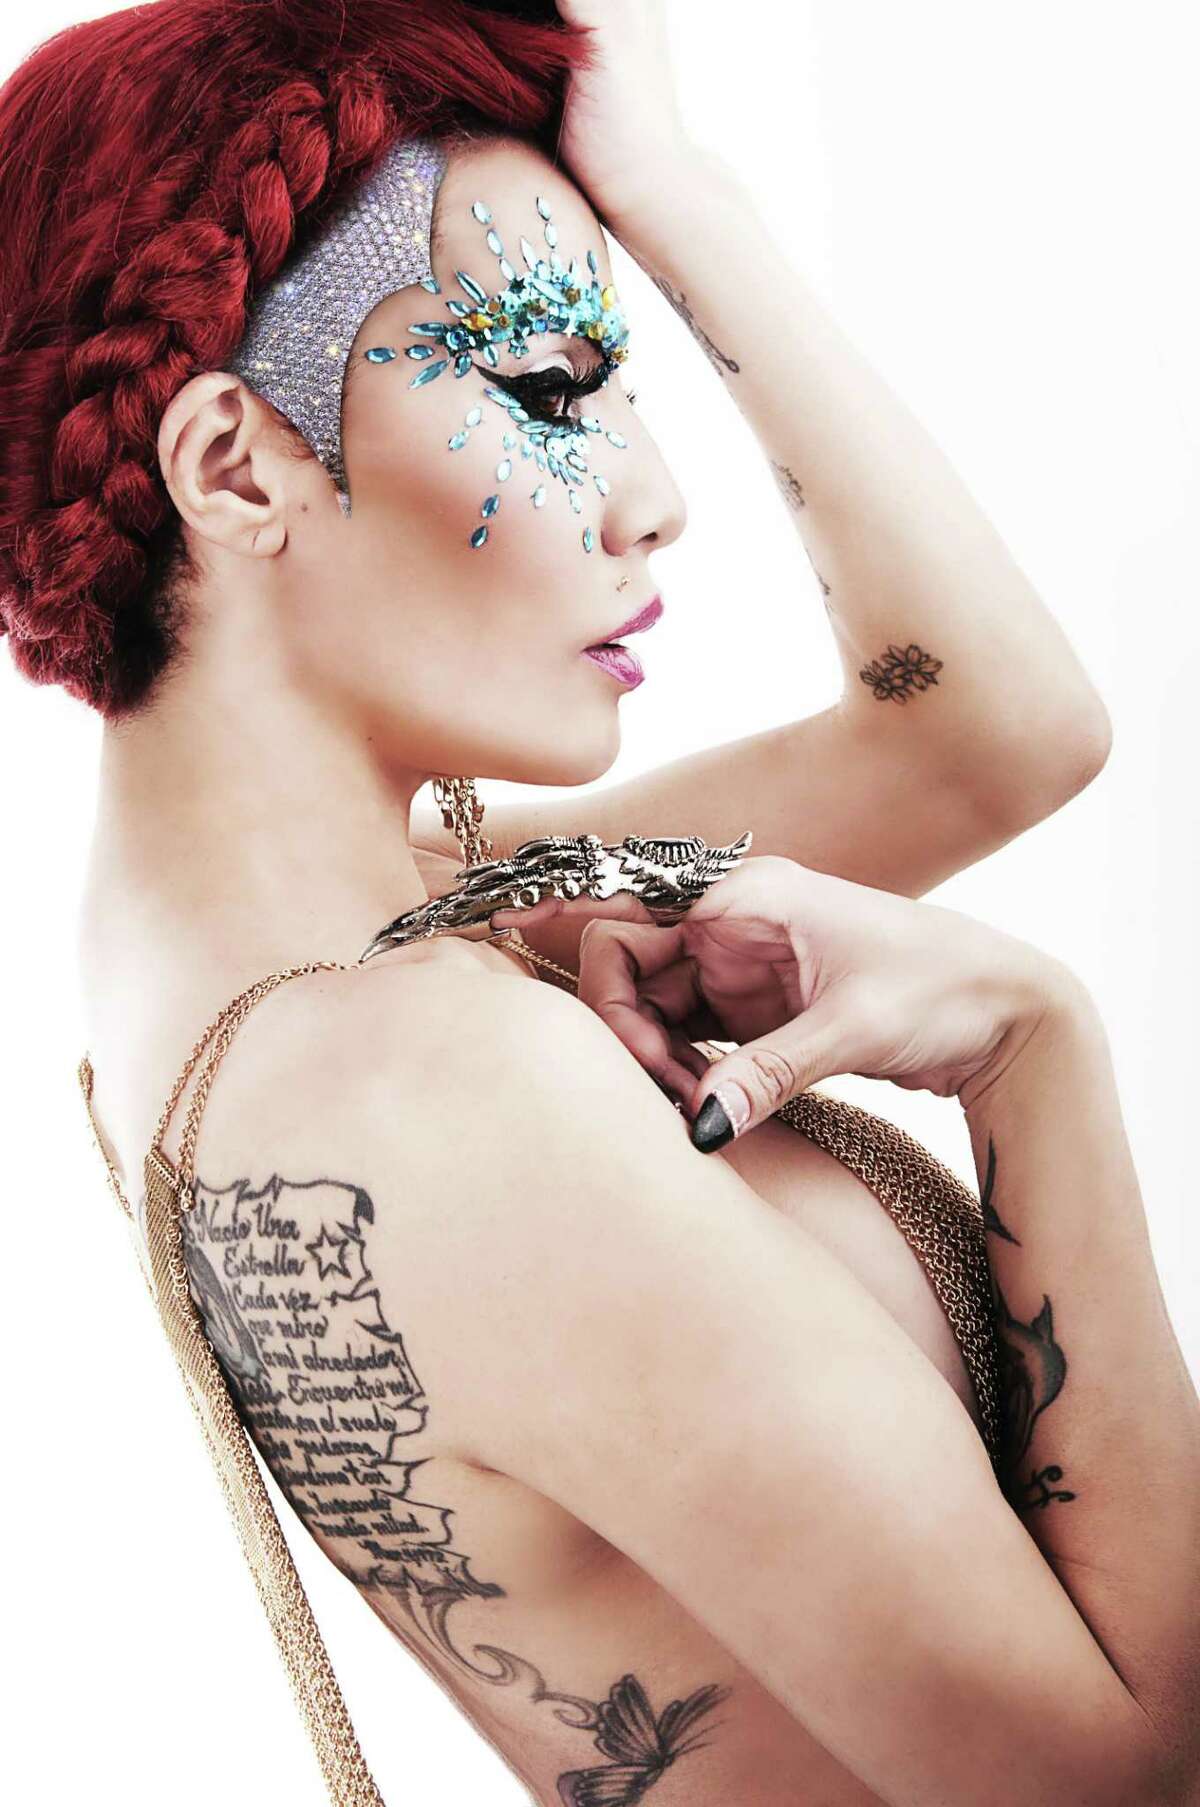 Ivy queen tattoos